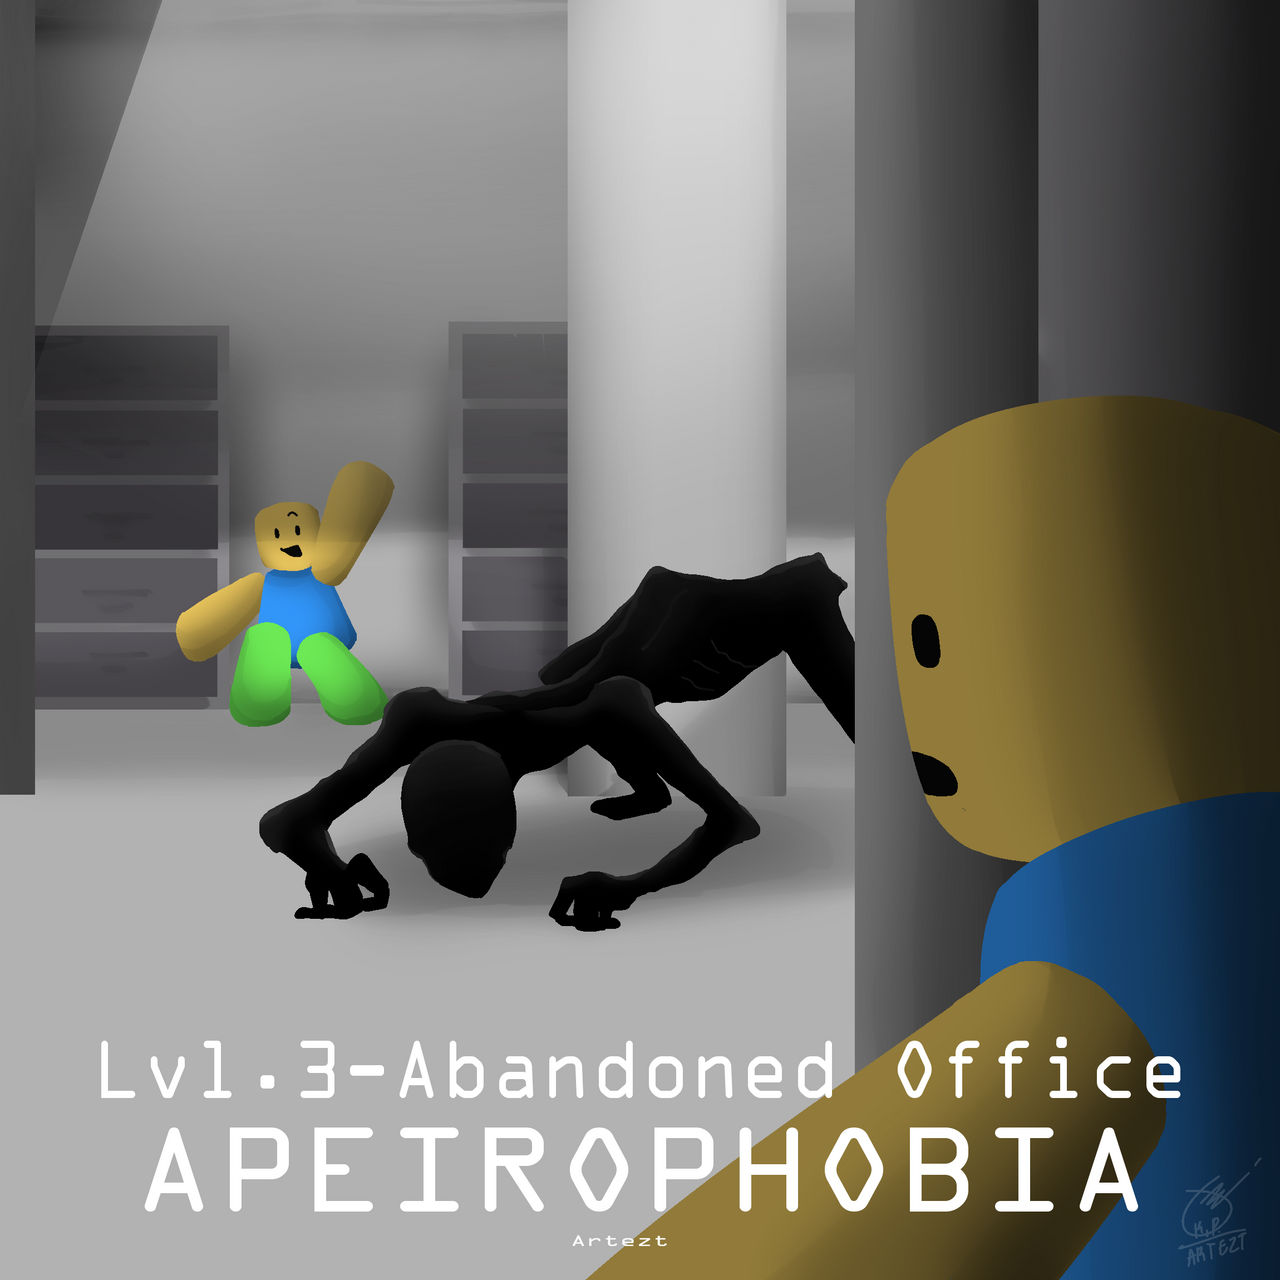 Apeirophobia (Roblox/Backrooms Fanart) by K1tsune-Art on DeviantArt